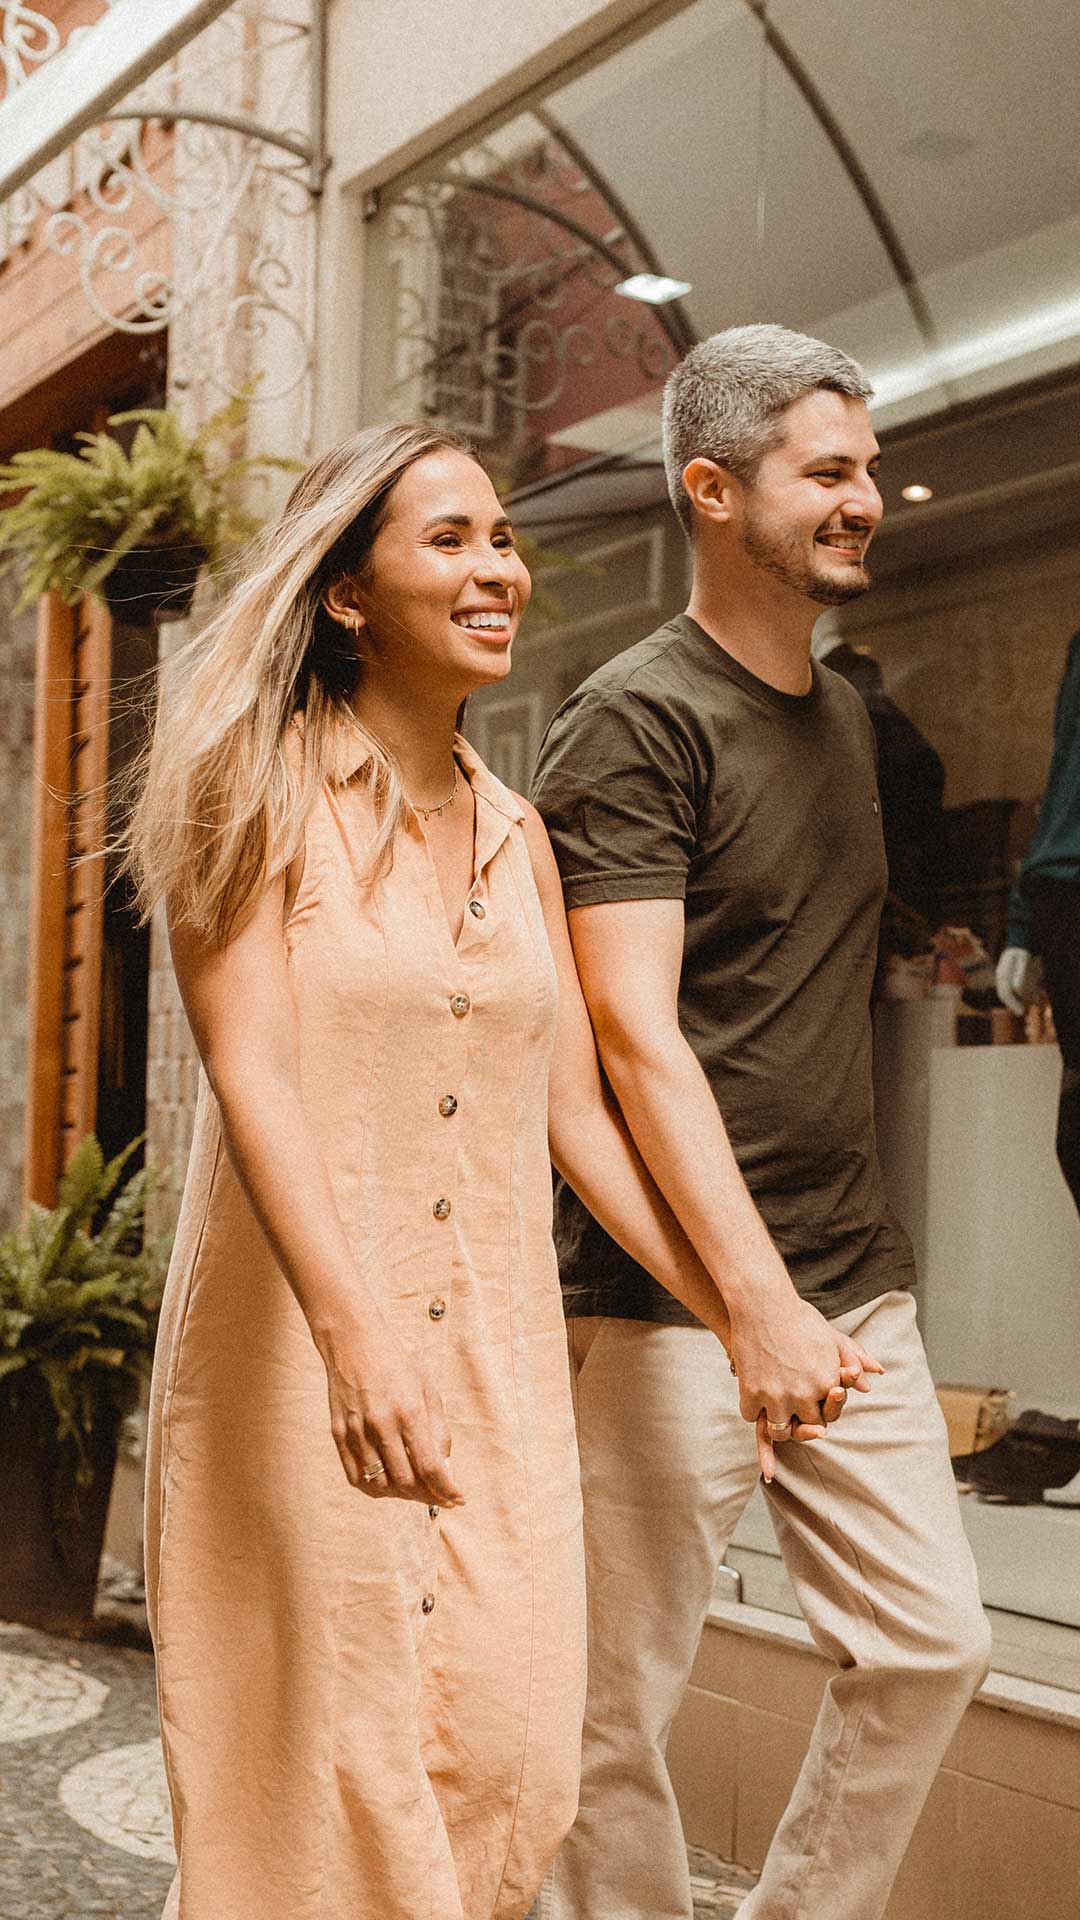 Couple walking hand-in-hand